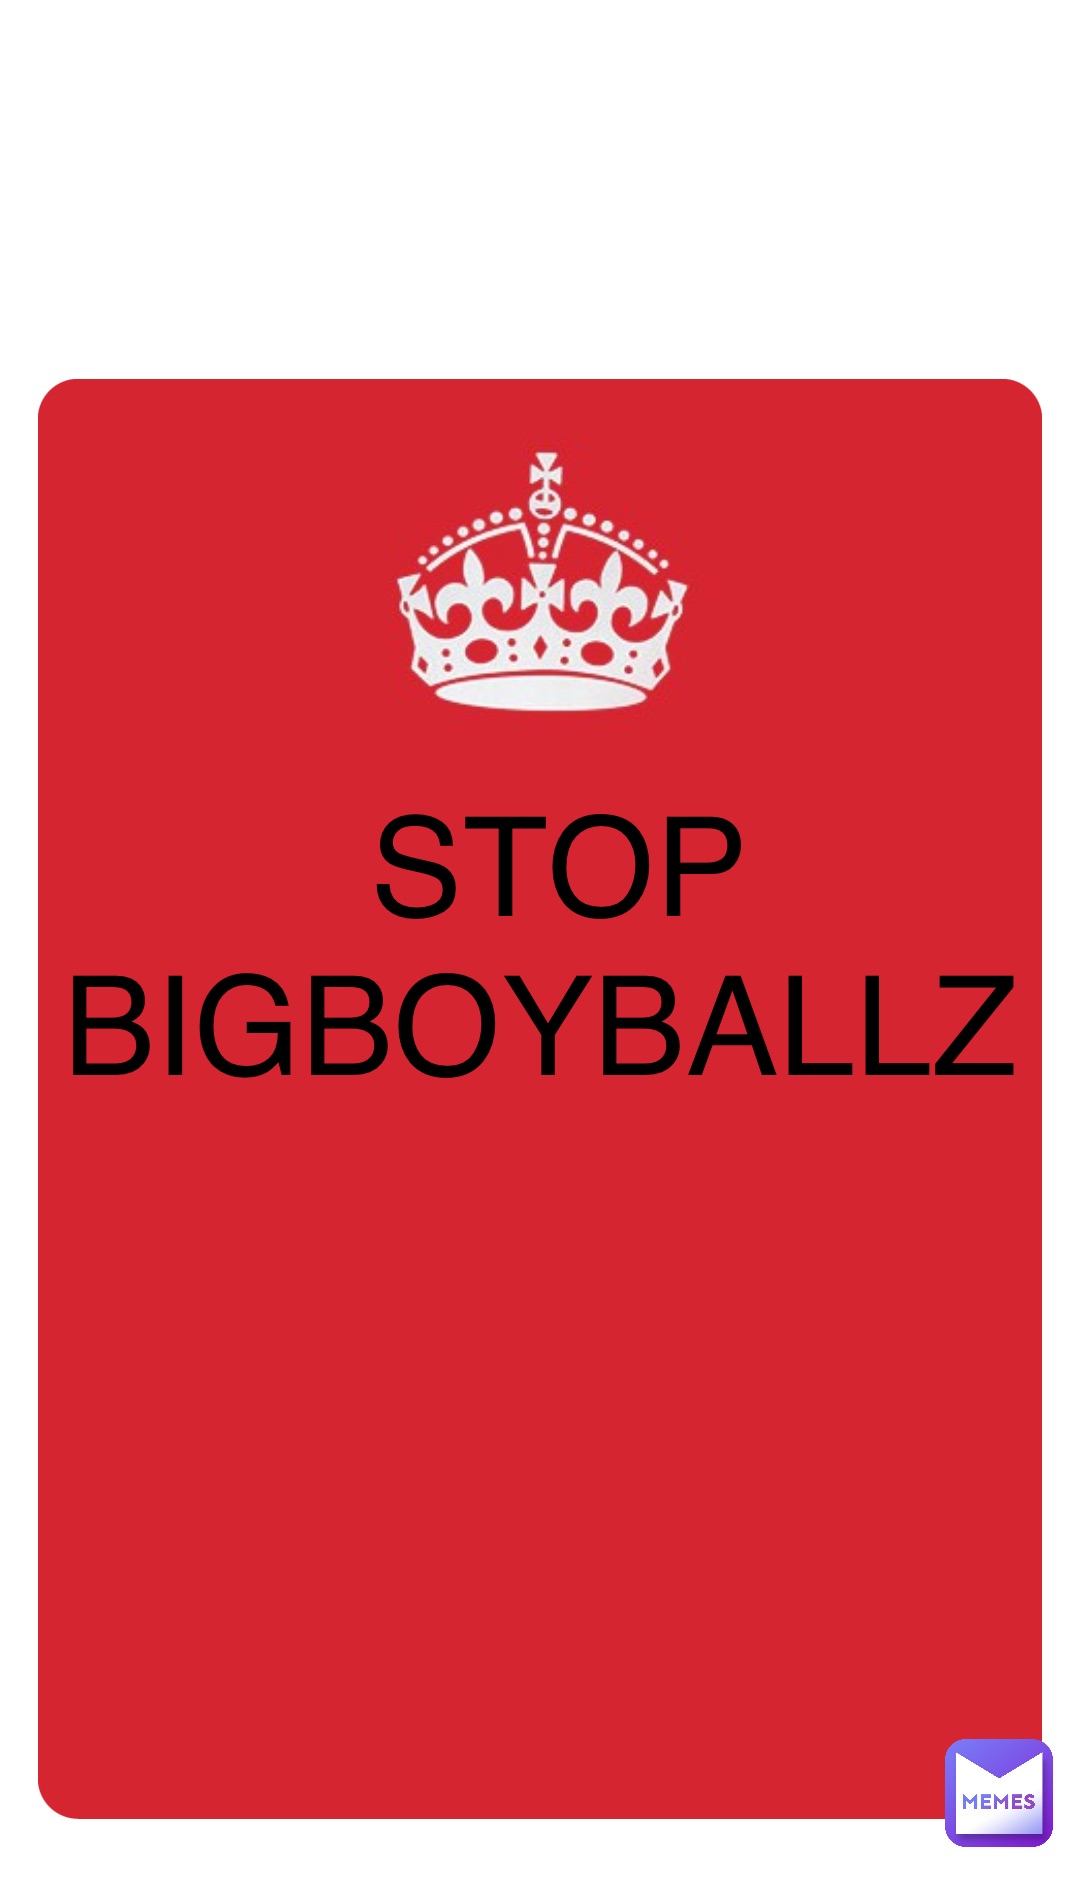 Double tap to edit STOP BIGBOYBALLZ